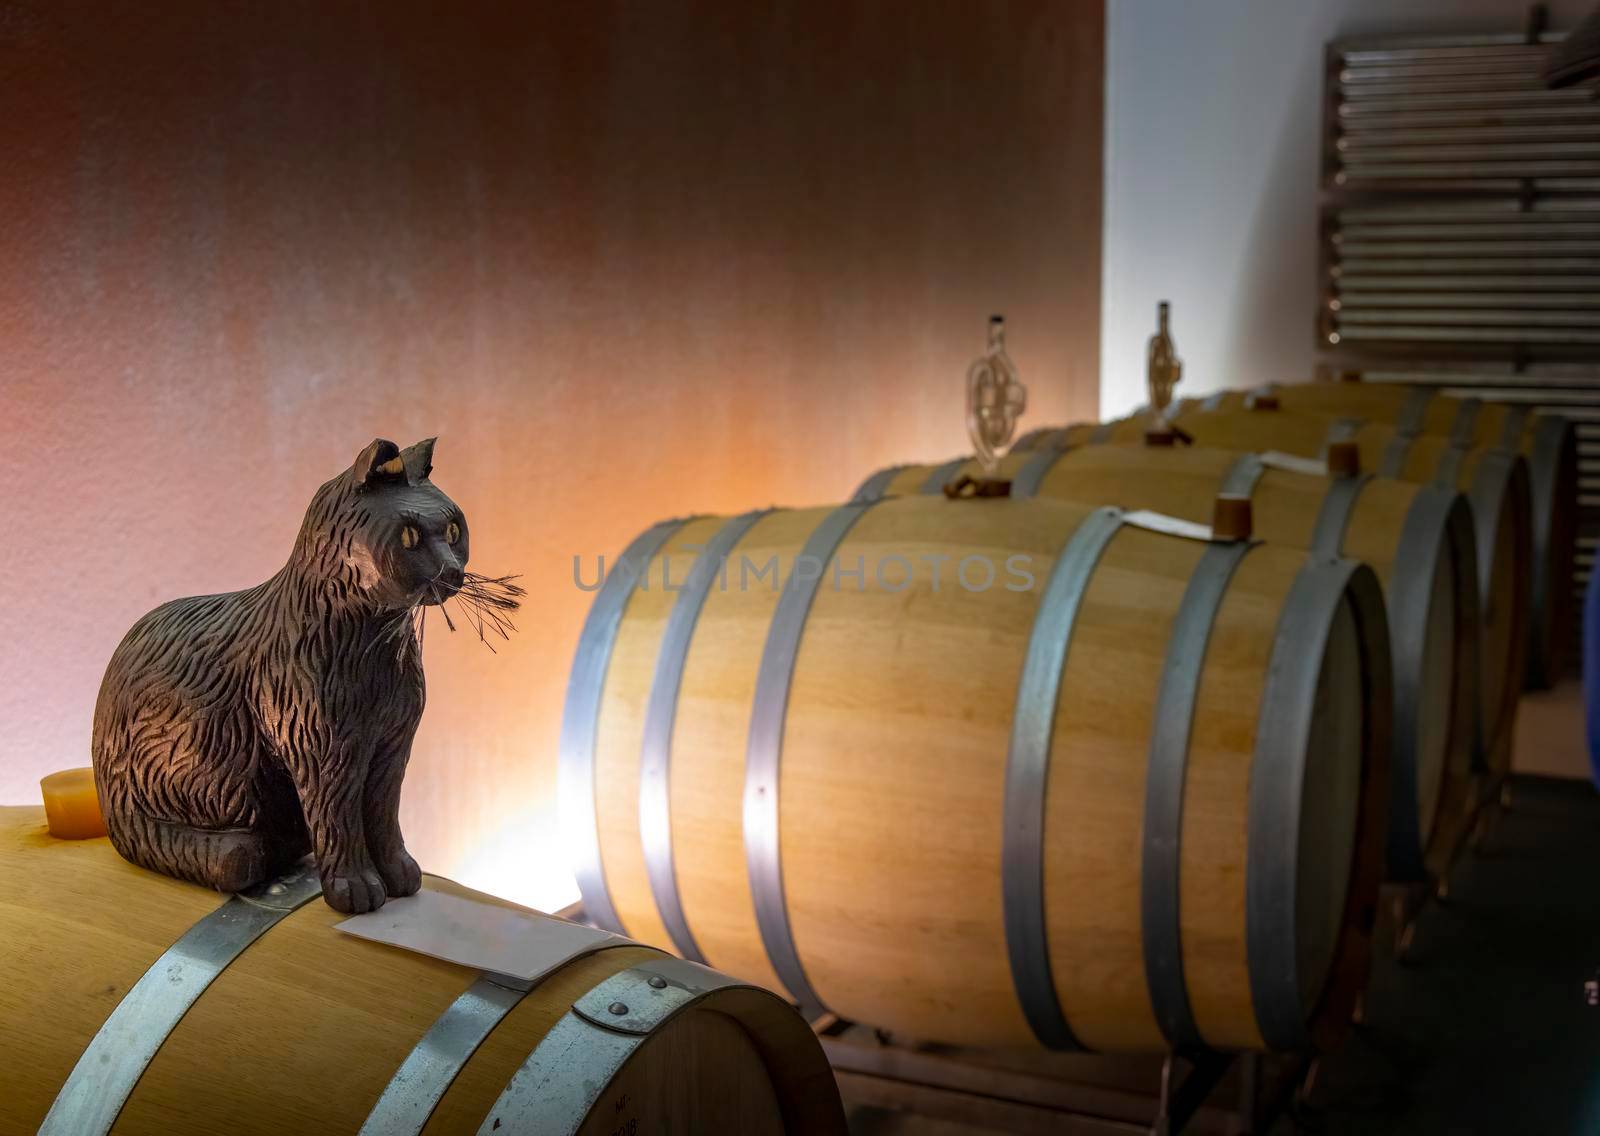 Black cat (schwarze katze) as a symbol of best wine in typical Austrian wine cellar by phbcz